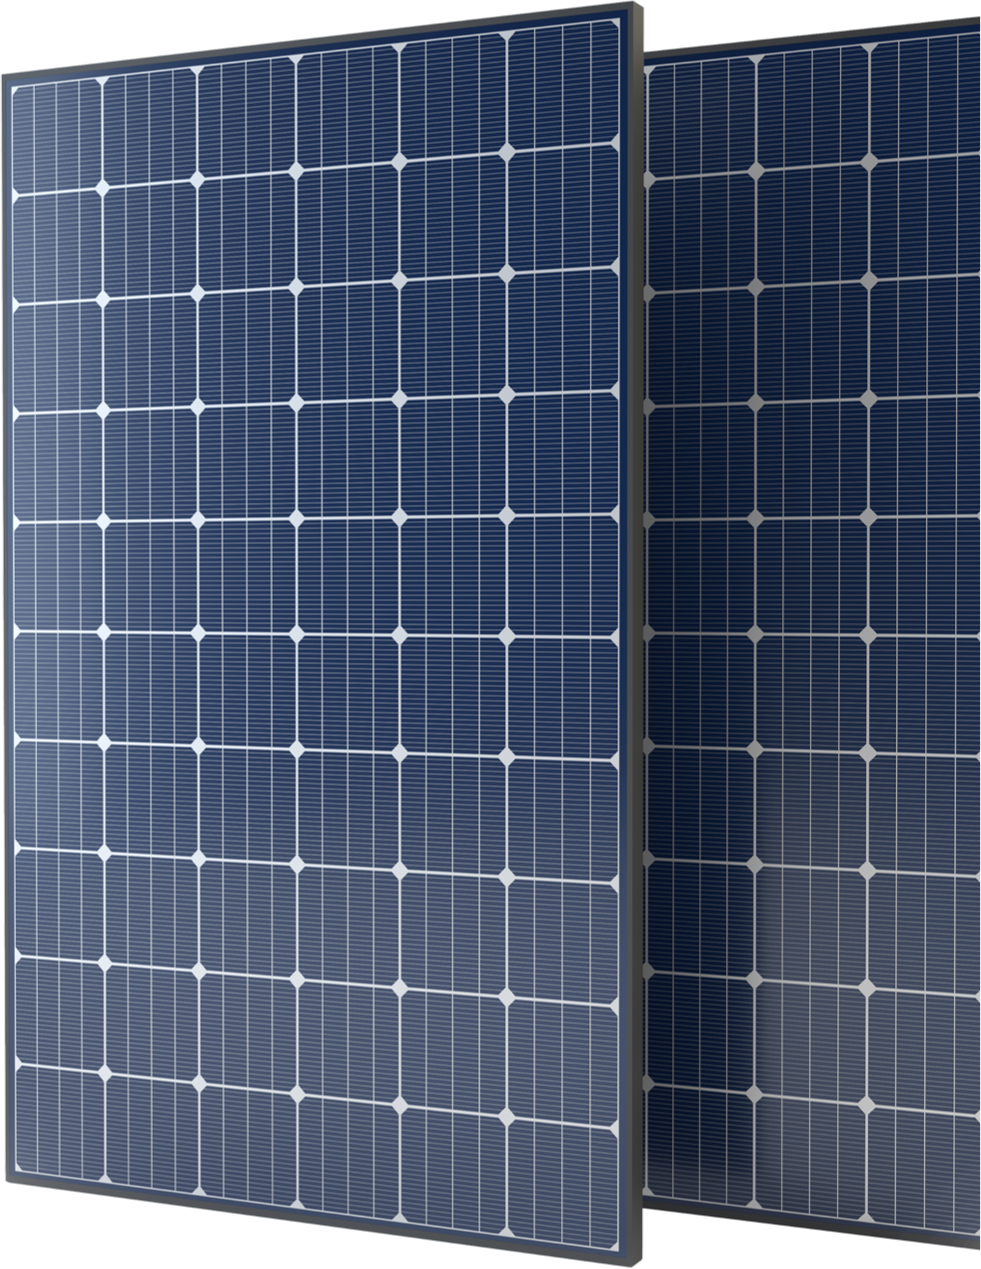 Two solar panels